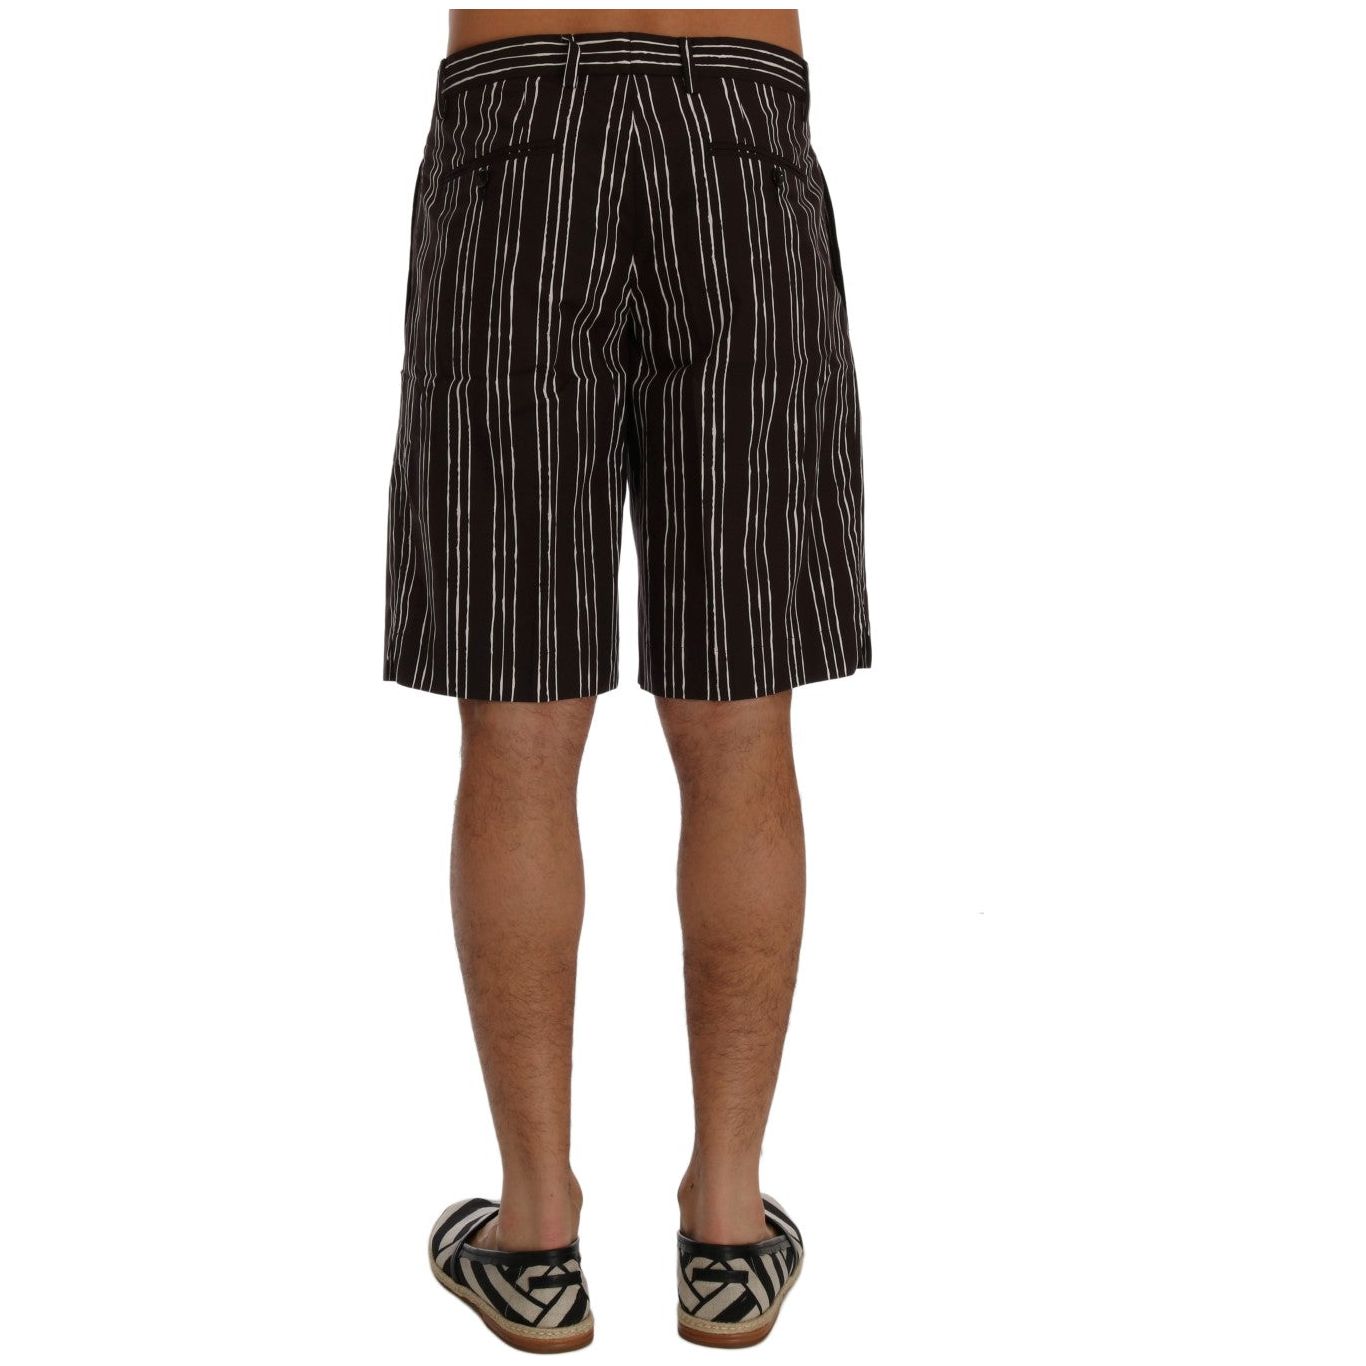 Dolce & Gabbana Bordeaux Striped Cotton Knee High Shorts bordeaux-white-striped-hemp-casual-shorts